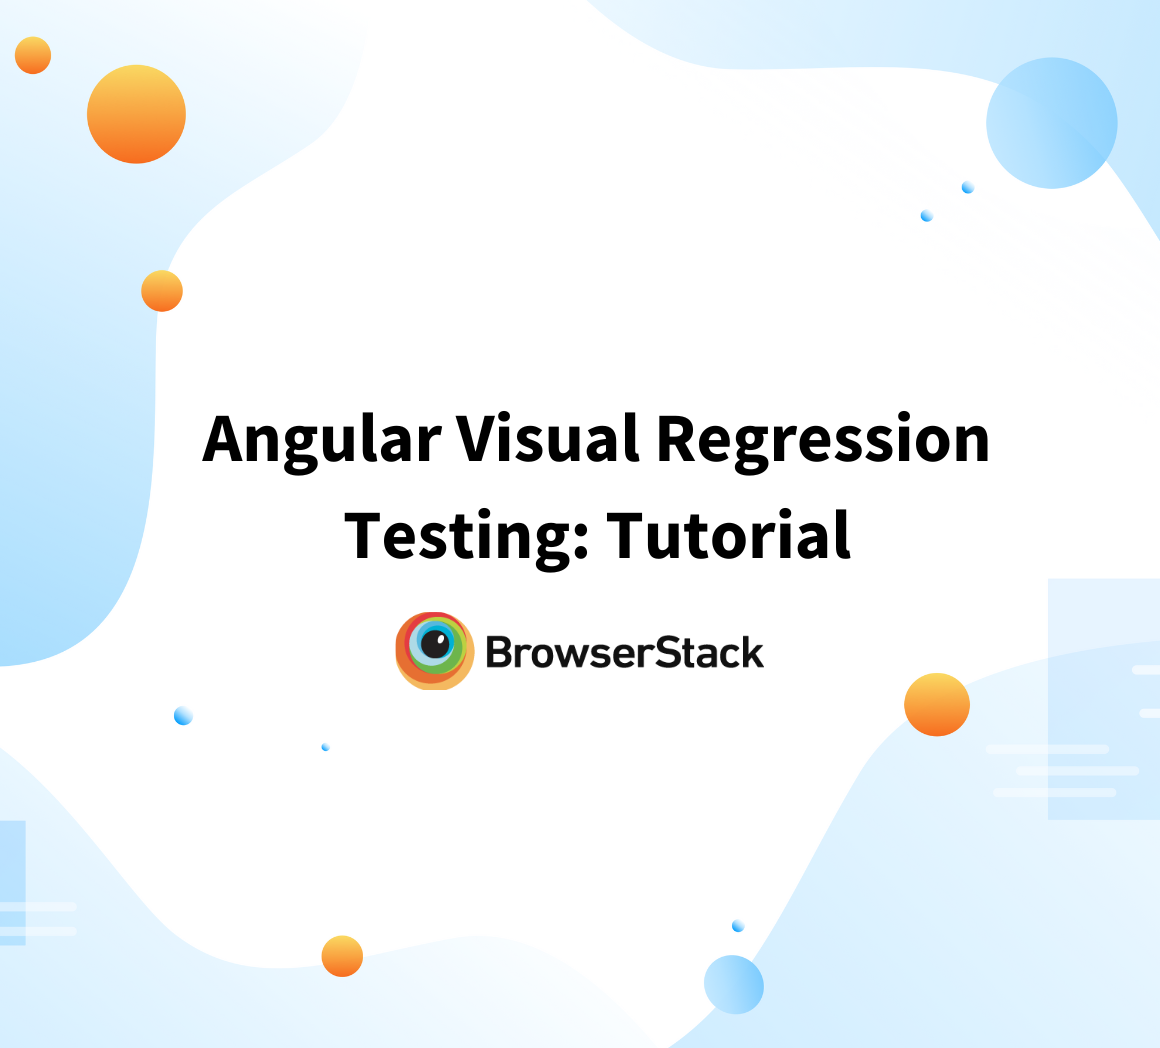 Angular Visual Regression Testing: Tutorial